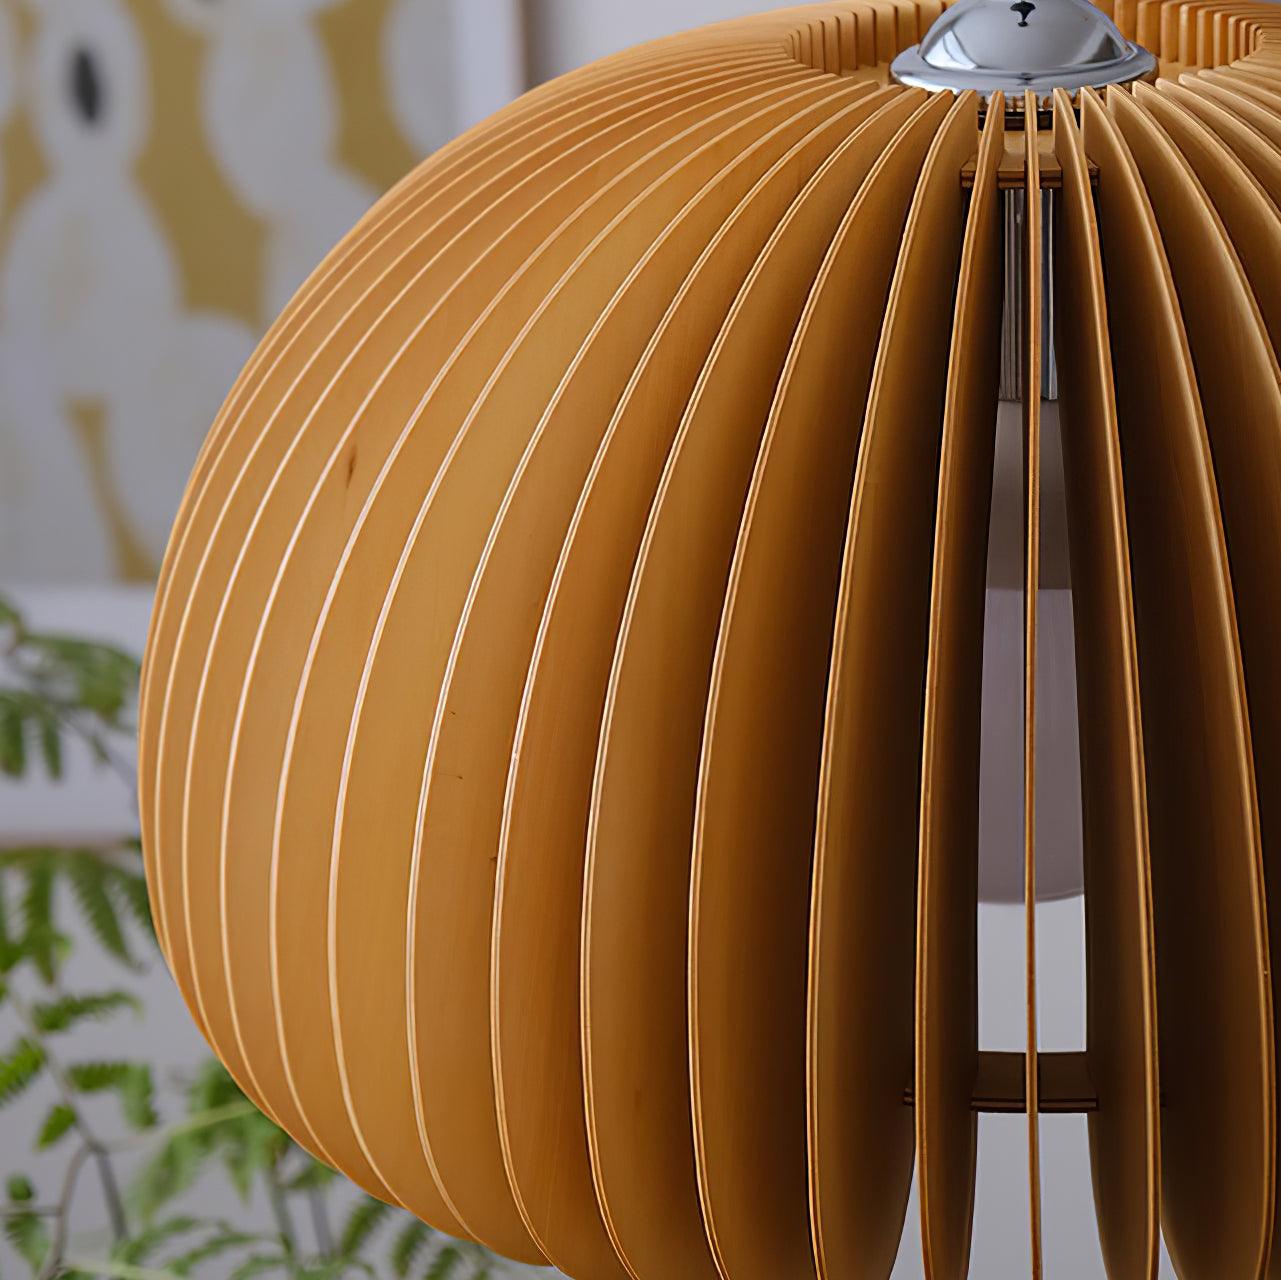 Aneko Pumpkin Pendant Lamp